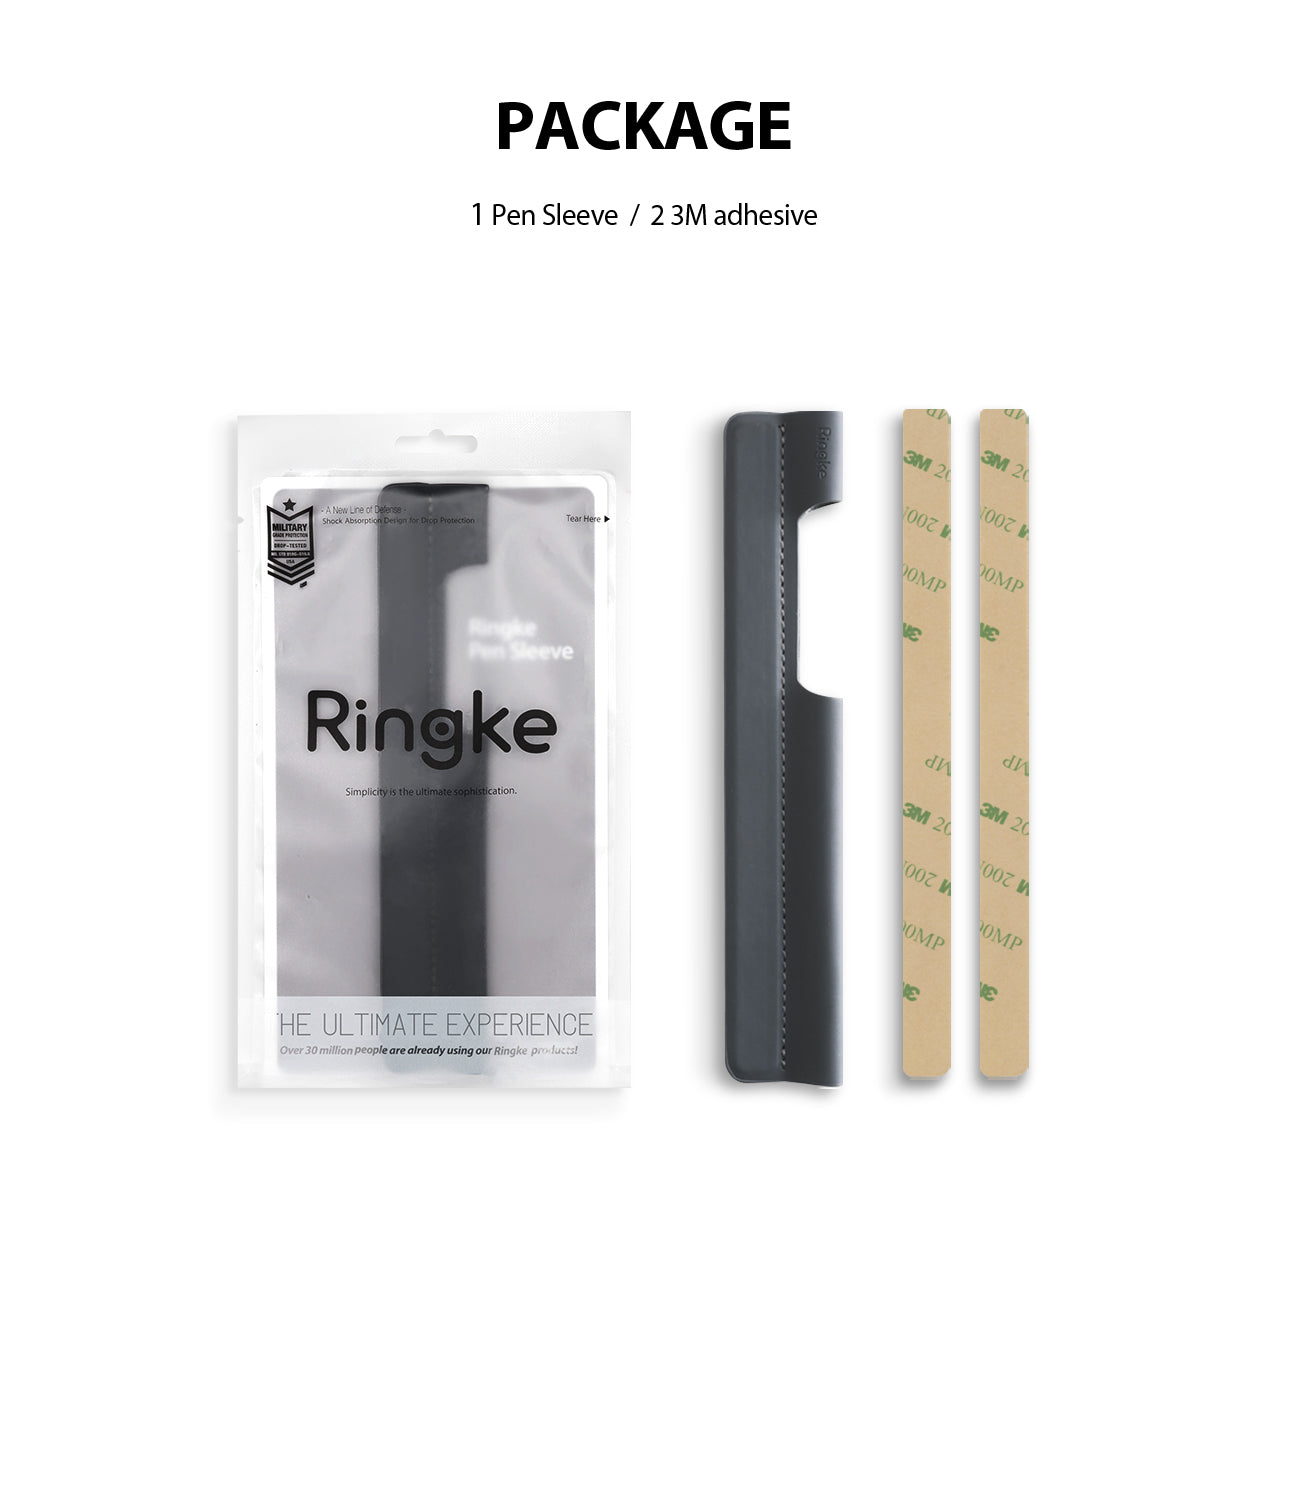 Ringke Pen Sleeve Charcoal Gray, apple pencil, Package